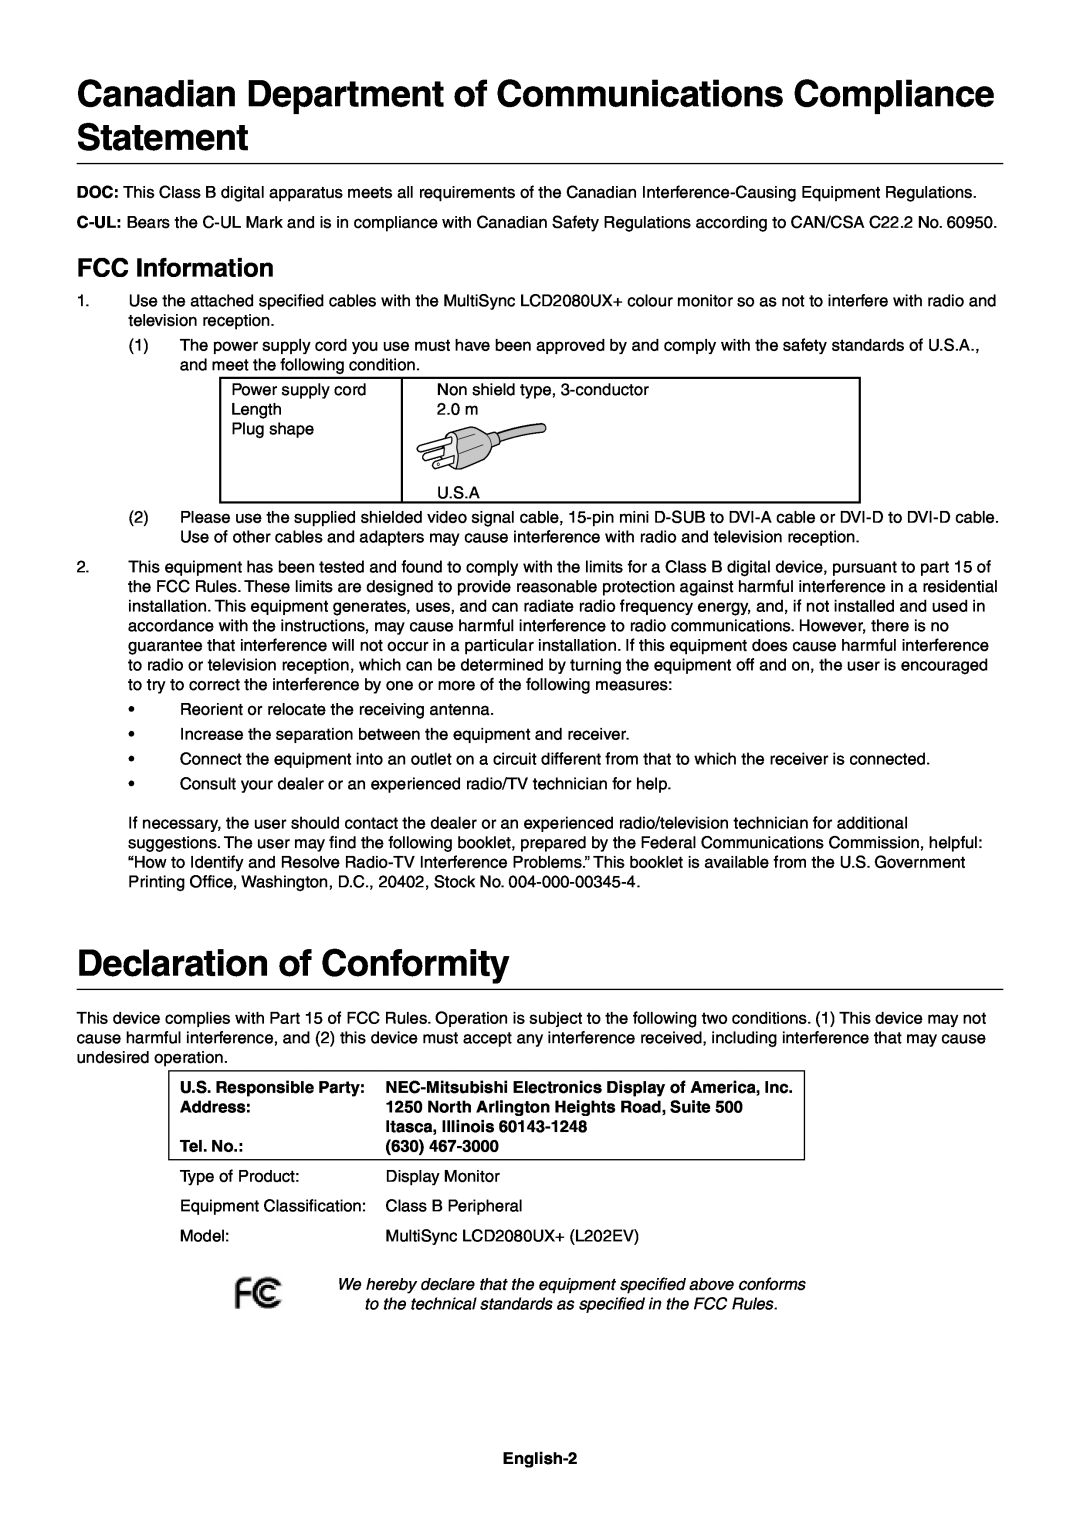 NEC LCD2080UX+ Declaration of Conformity, FCC Information, U.S. Responsible Party, Address, Itasca, Illinois, Tel. No 